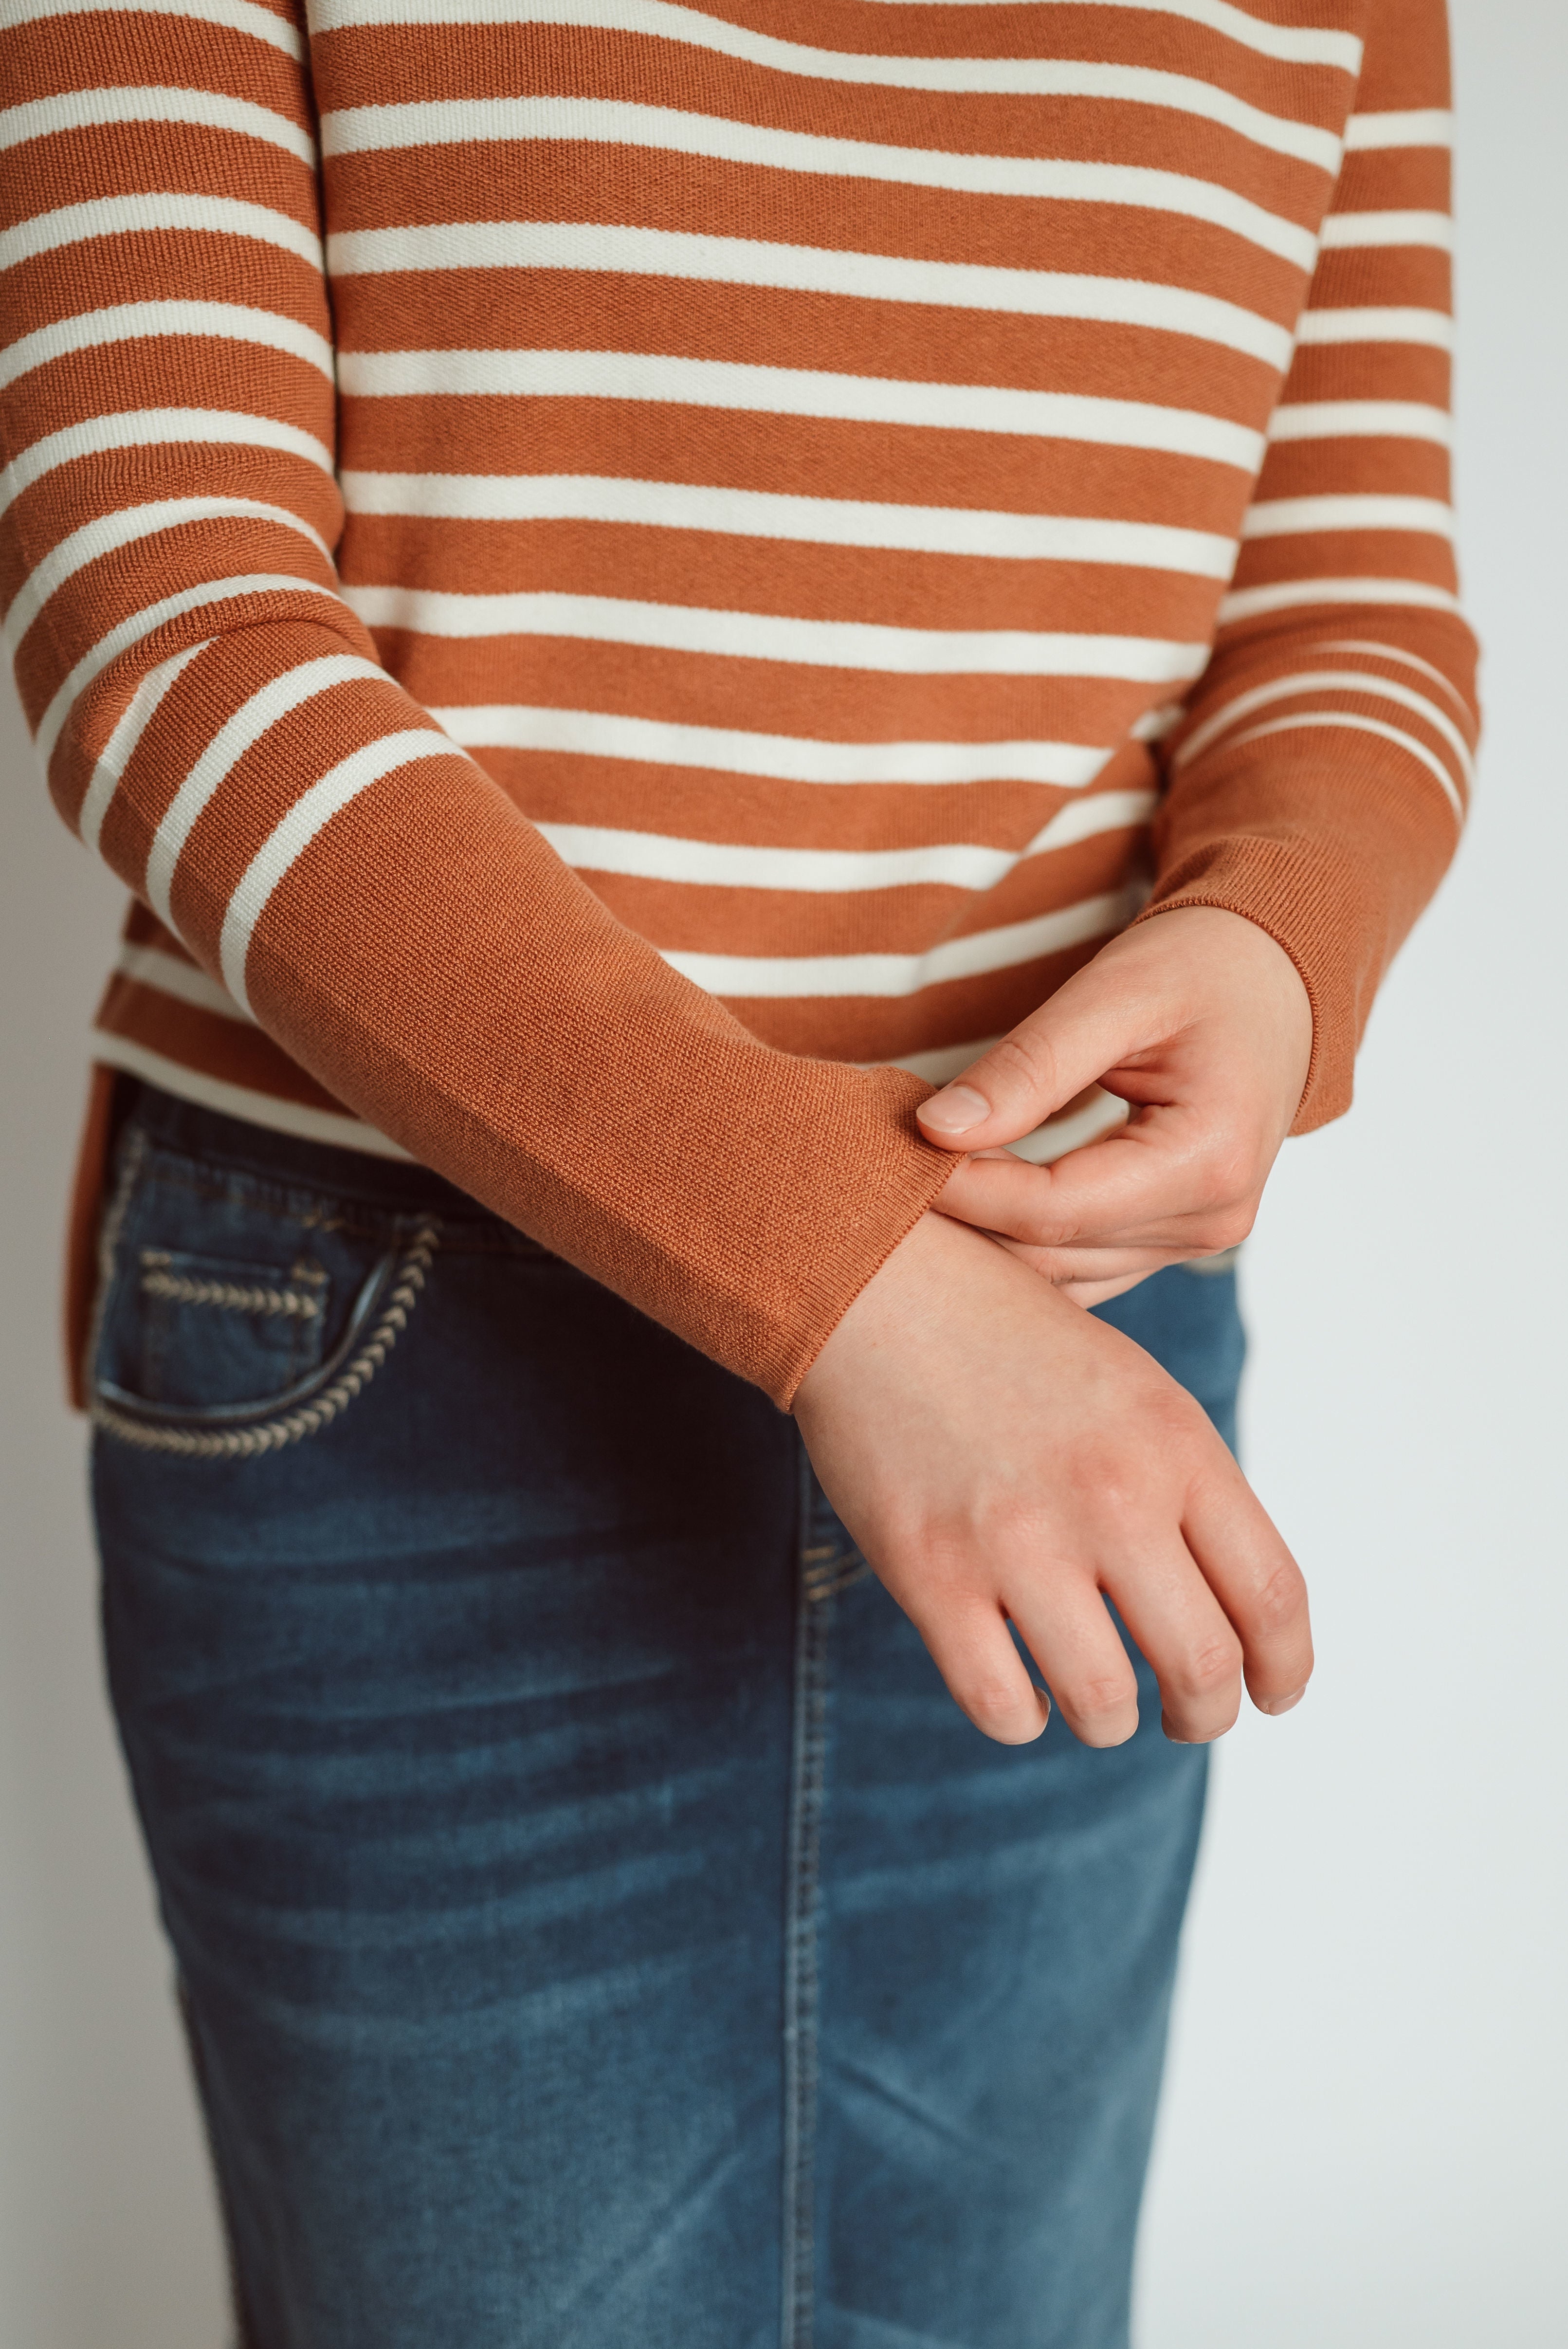 Jasmine Sweater in Caramel/White Stripes - FINAL SALE